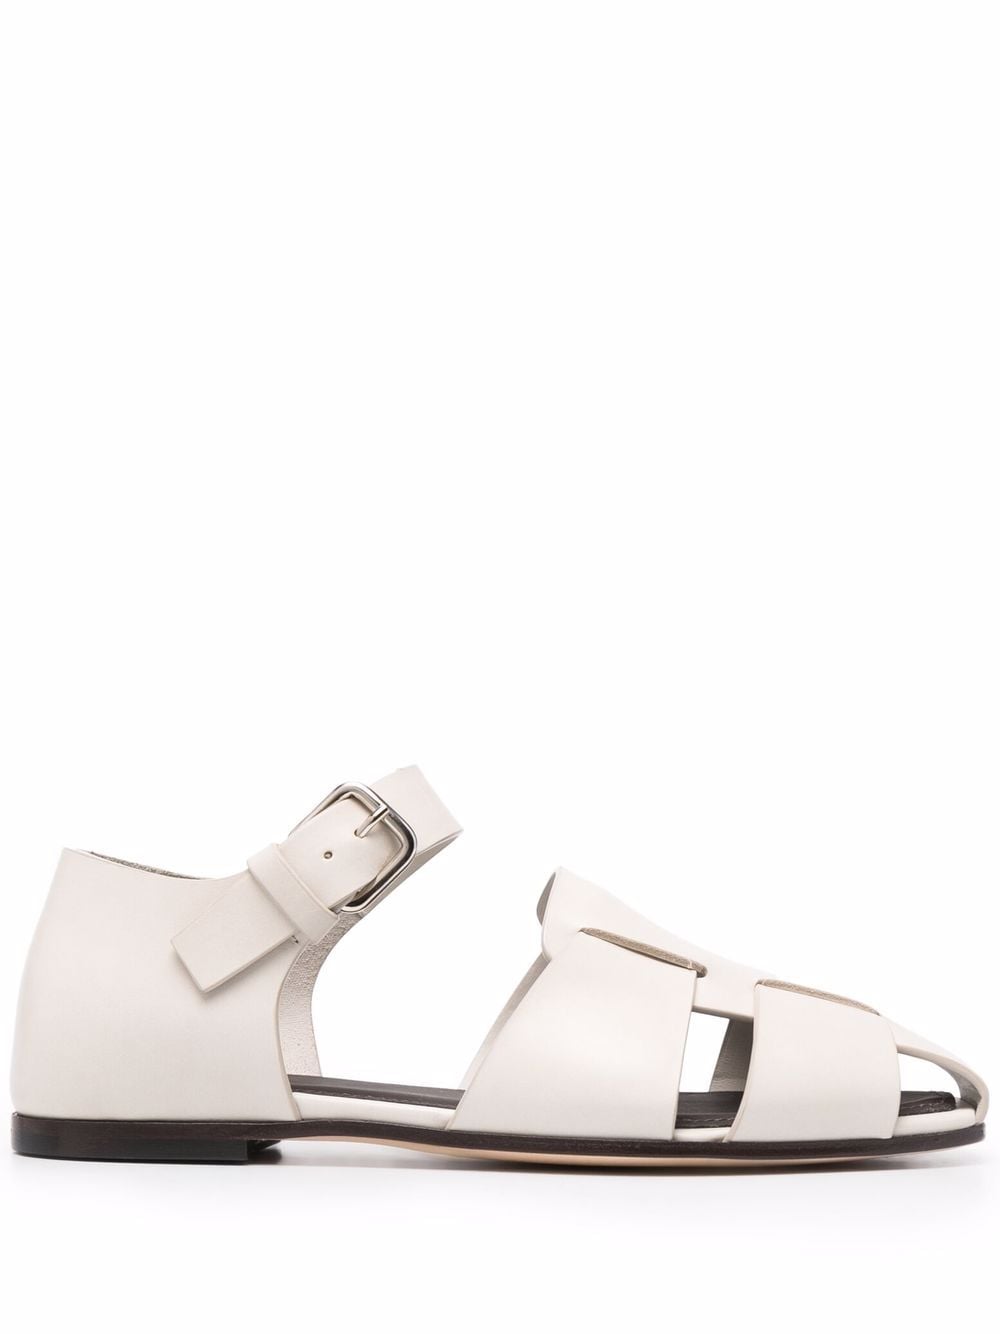 Officine Creative cut-out leather sandals - White von Officine Creative